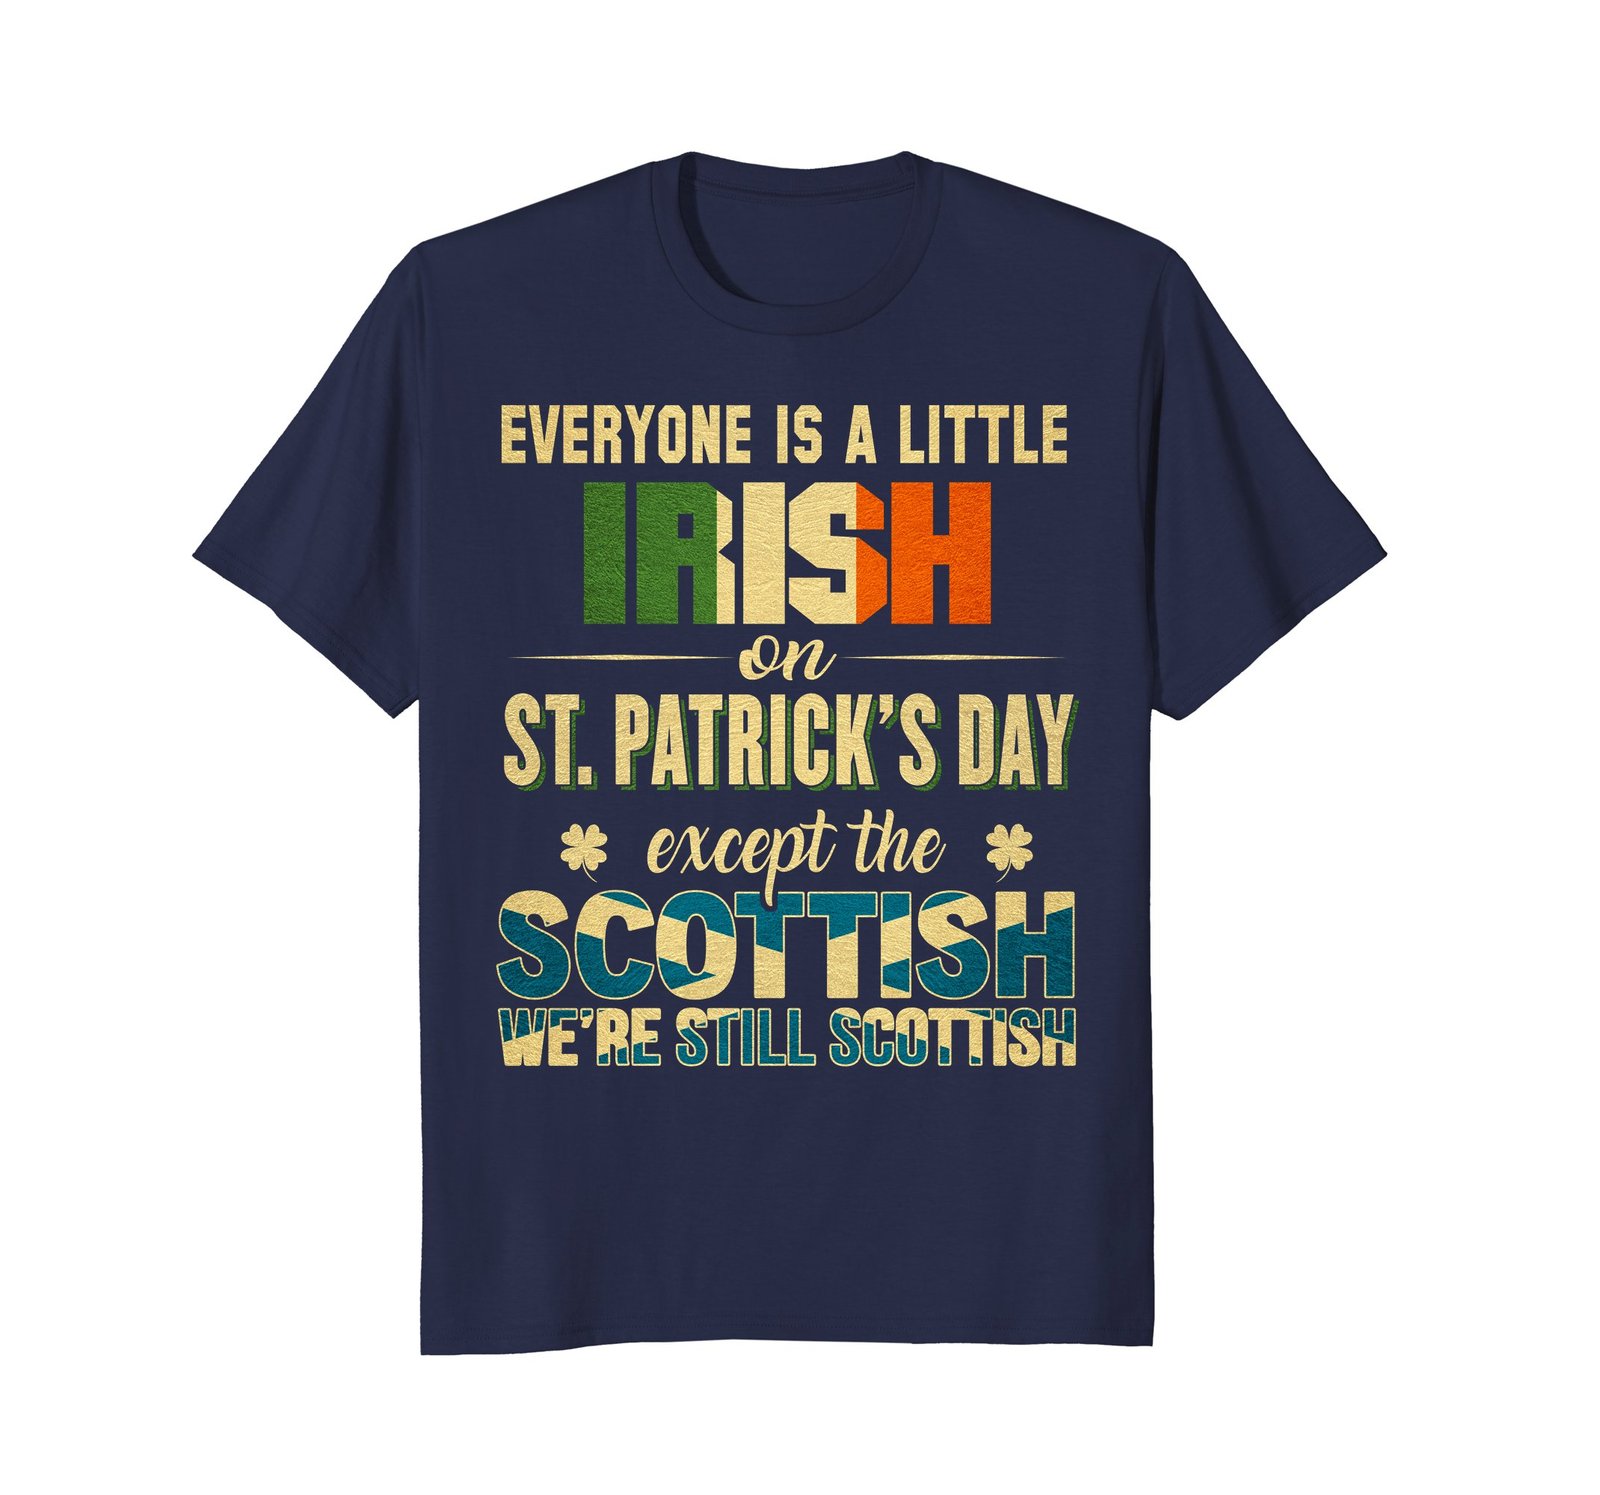 Funny Shirts - We're Still Scottish on St. Patrick's Day T-Shirt Men